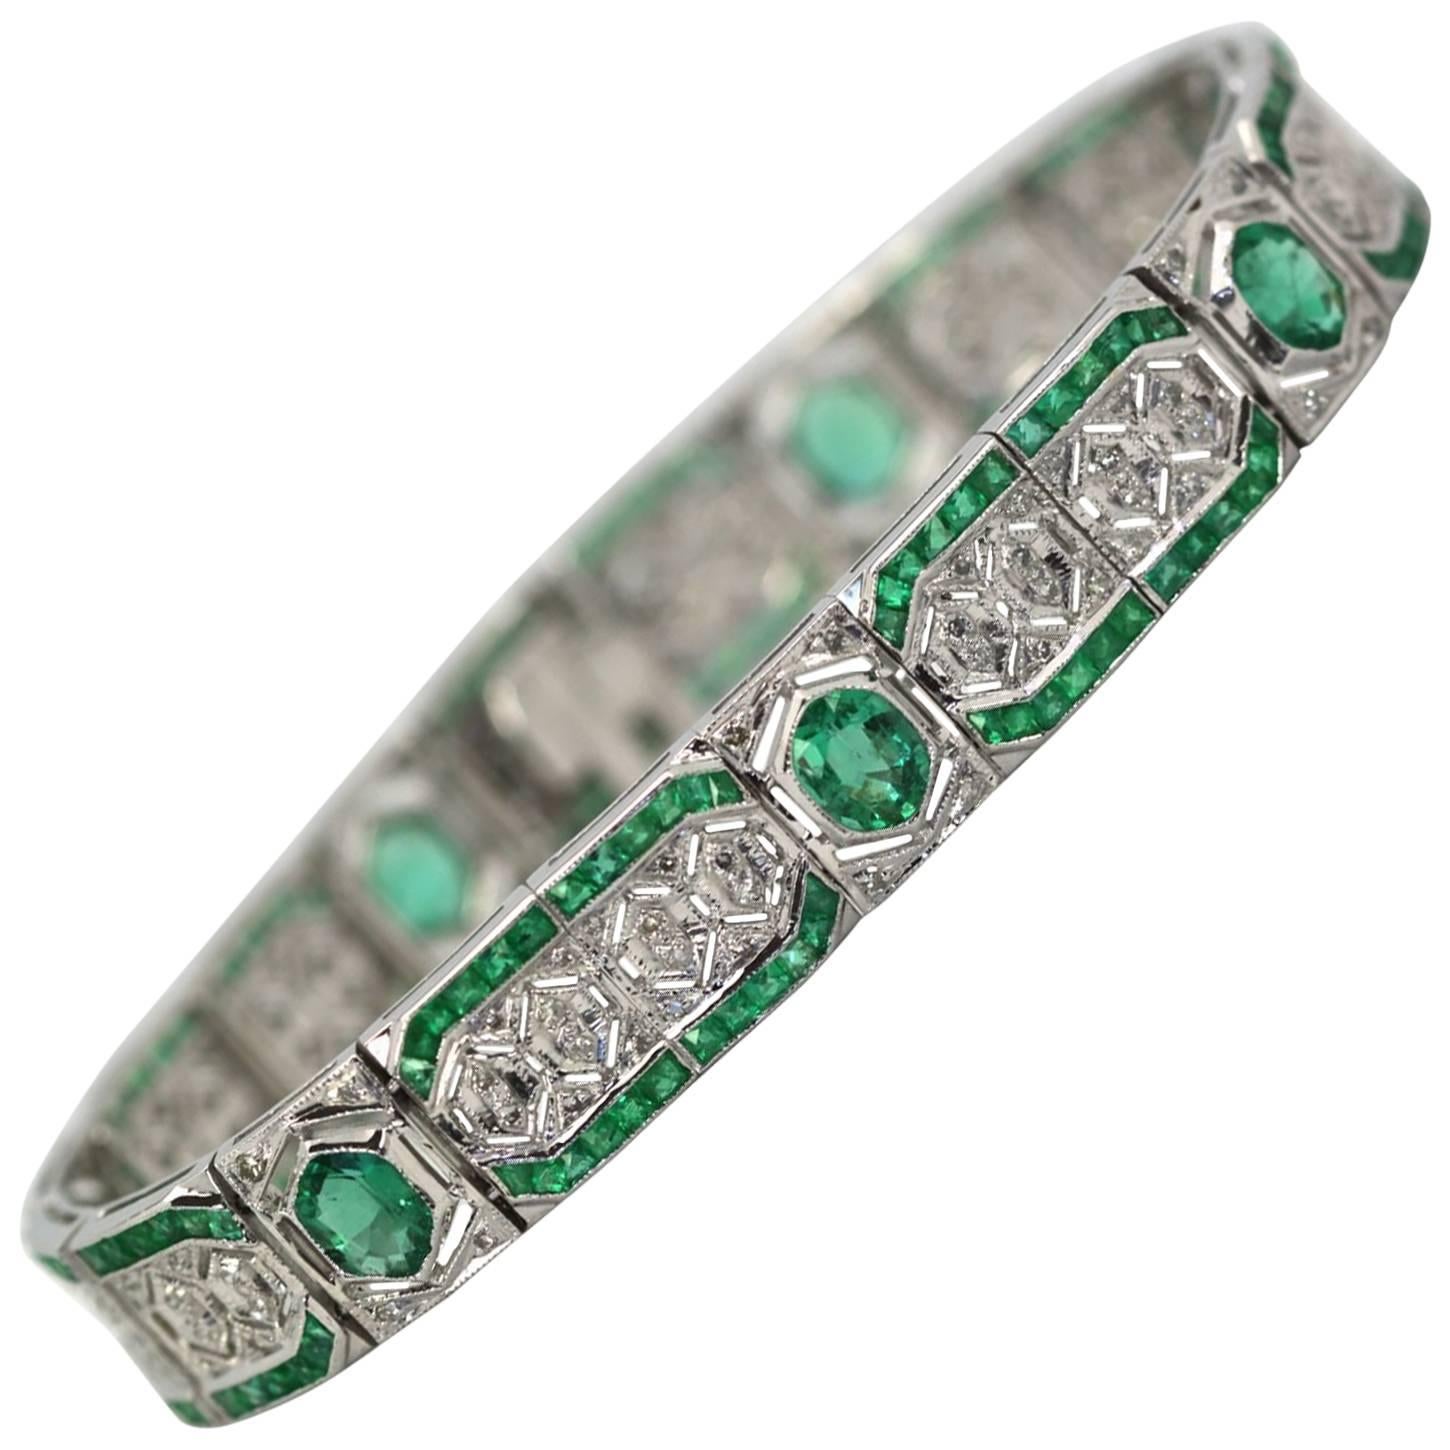 Modern Art Deco Style Diamond Emerald Bracelet